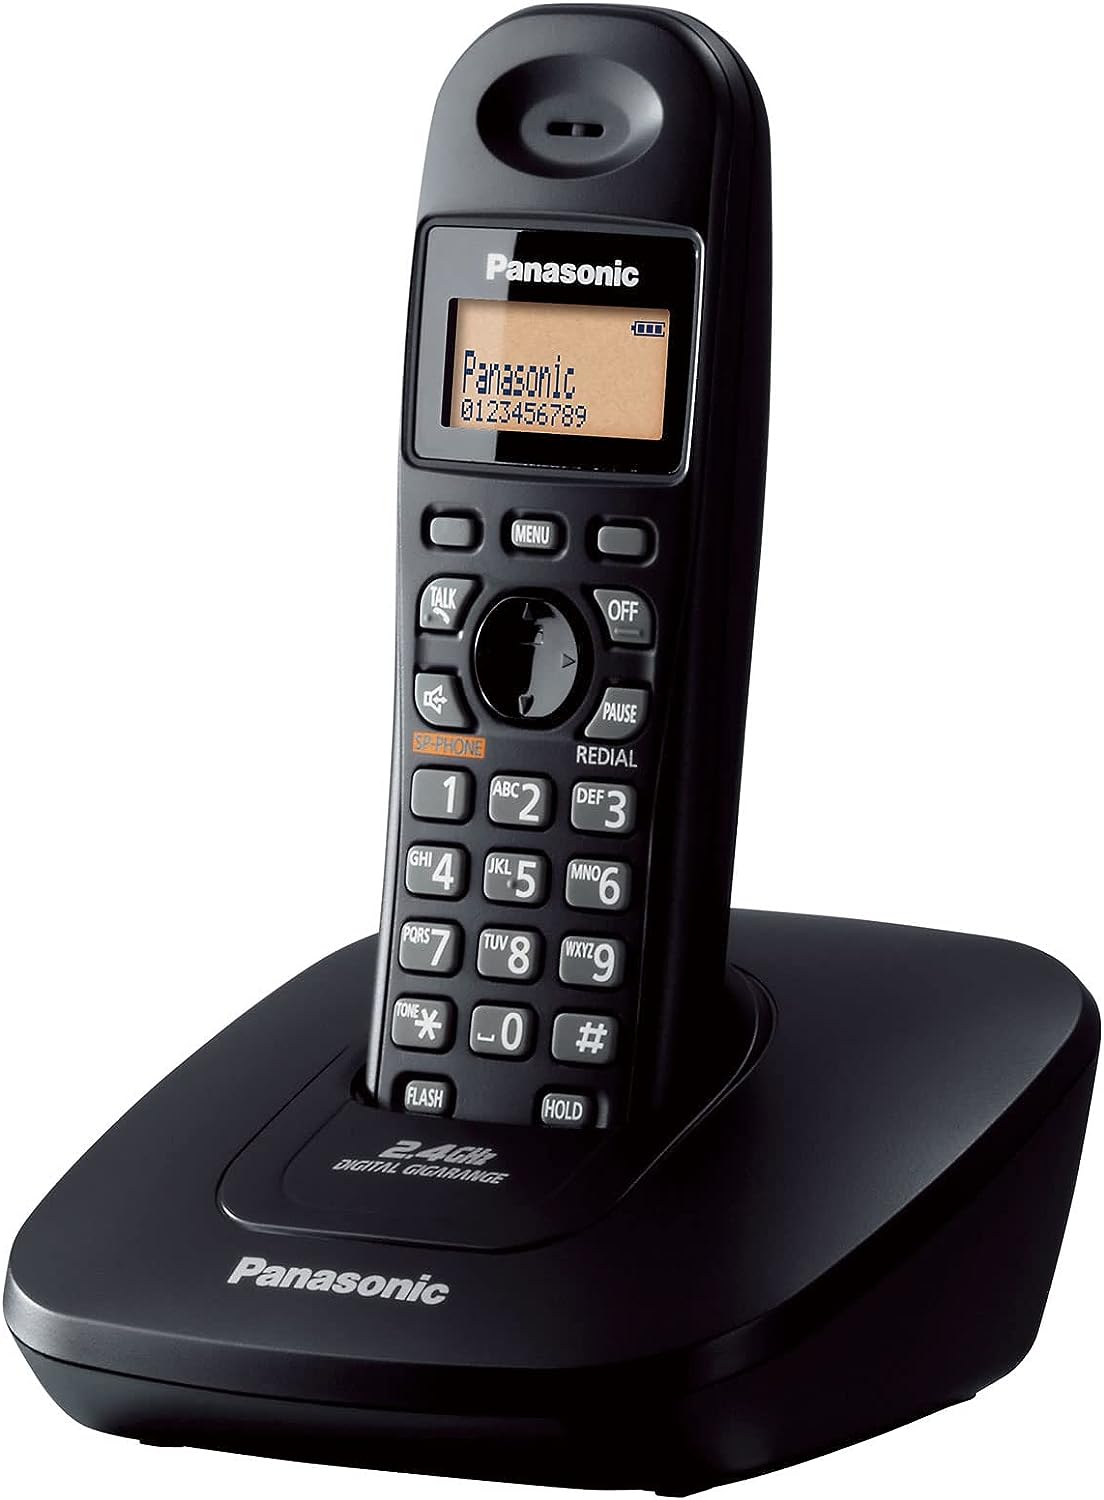 Panasonic Cordless Telephone Made in Malaysia KX-TG3611SX - Black